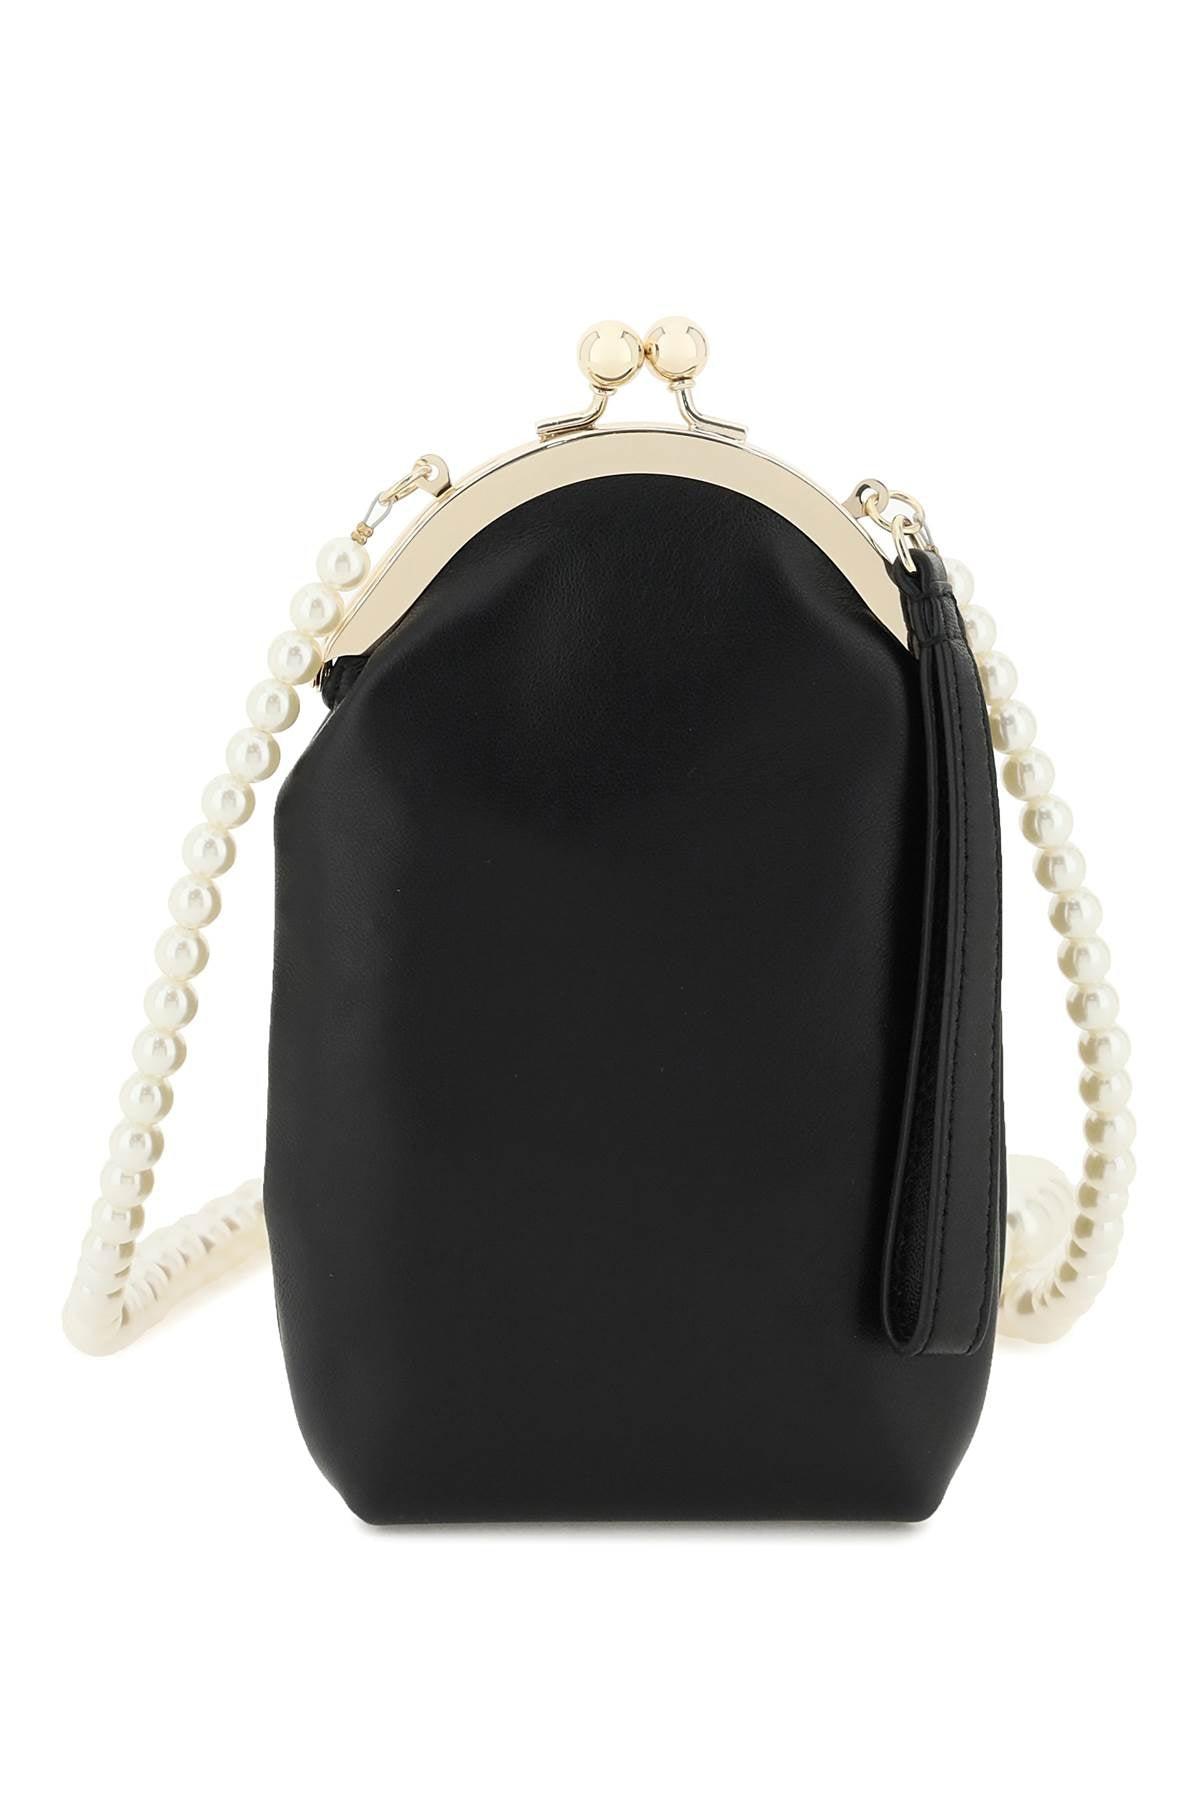 Simone Rocha Imone Rocha Nappa Leather Crossbody Bag in Black | Lyst